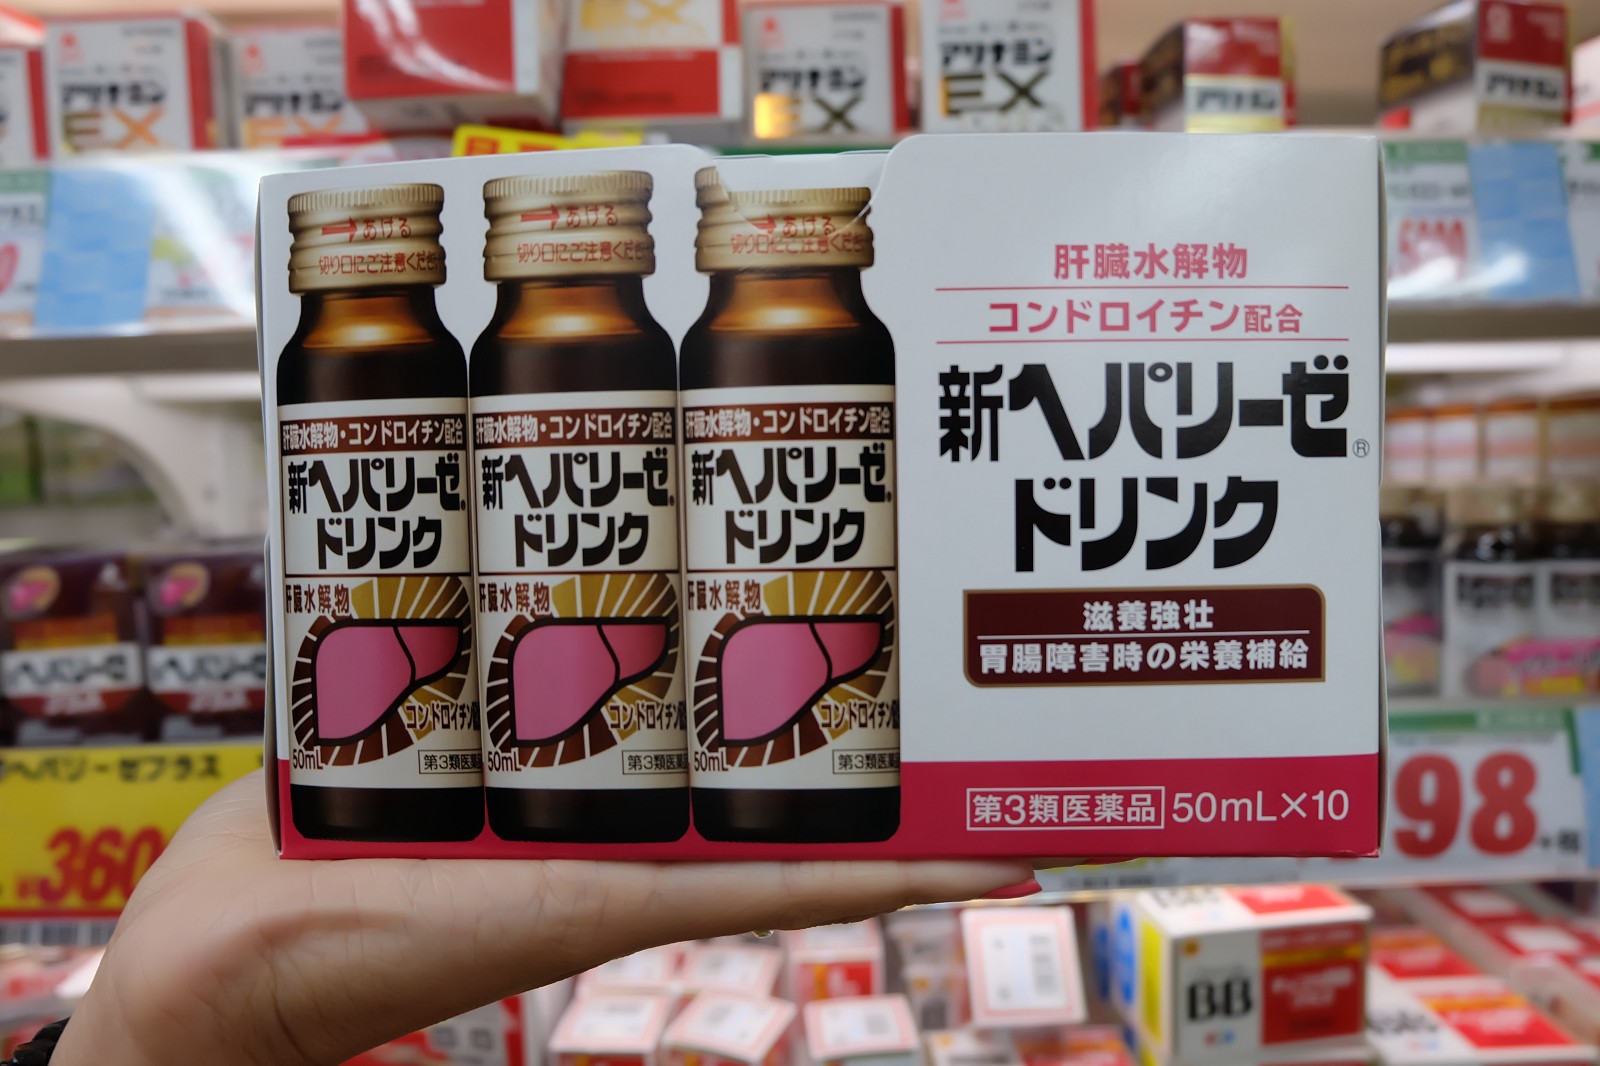 Heparize: hangover cure drink in Japan